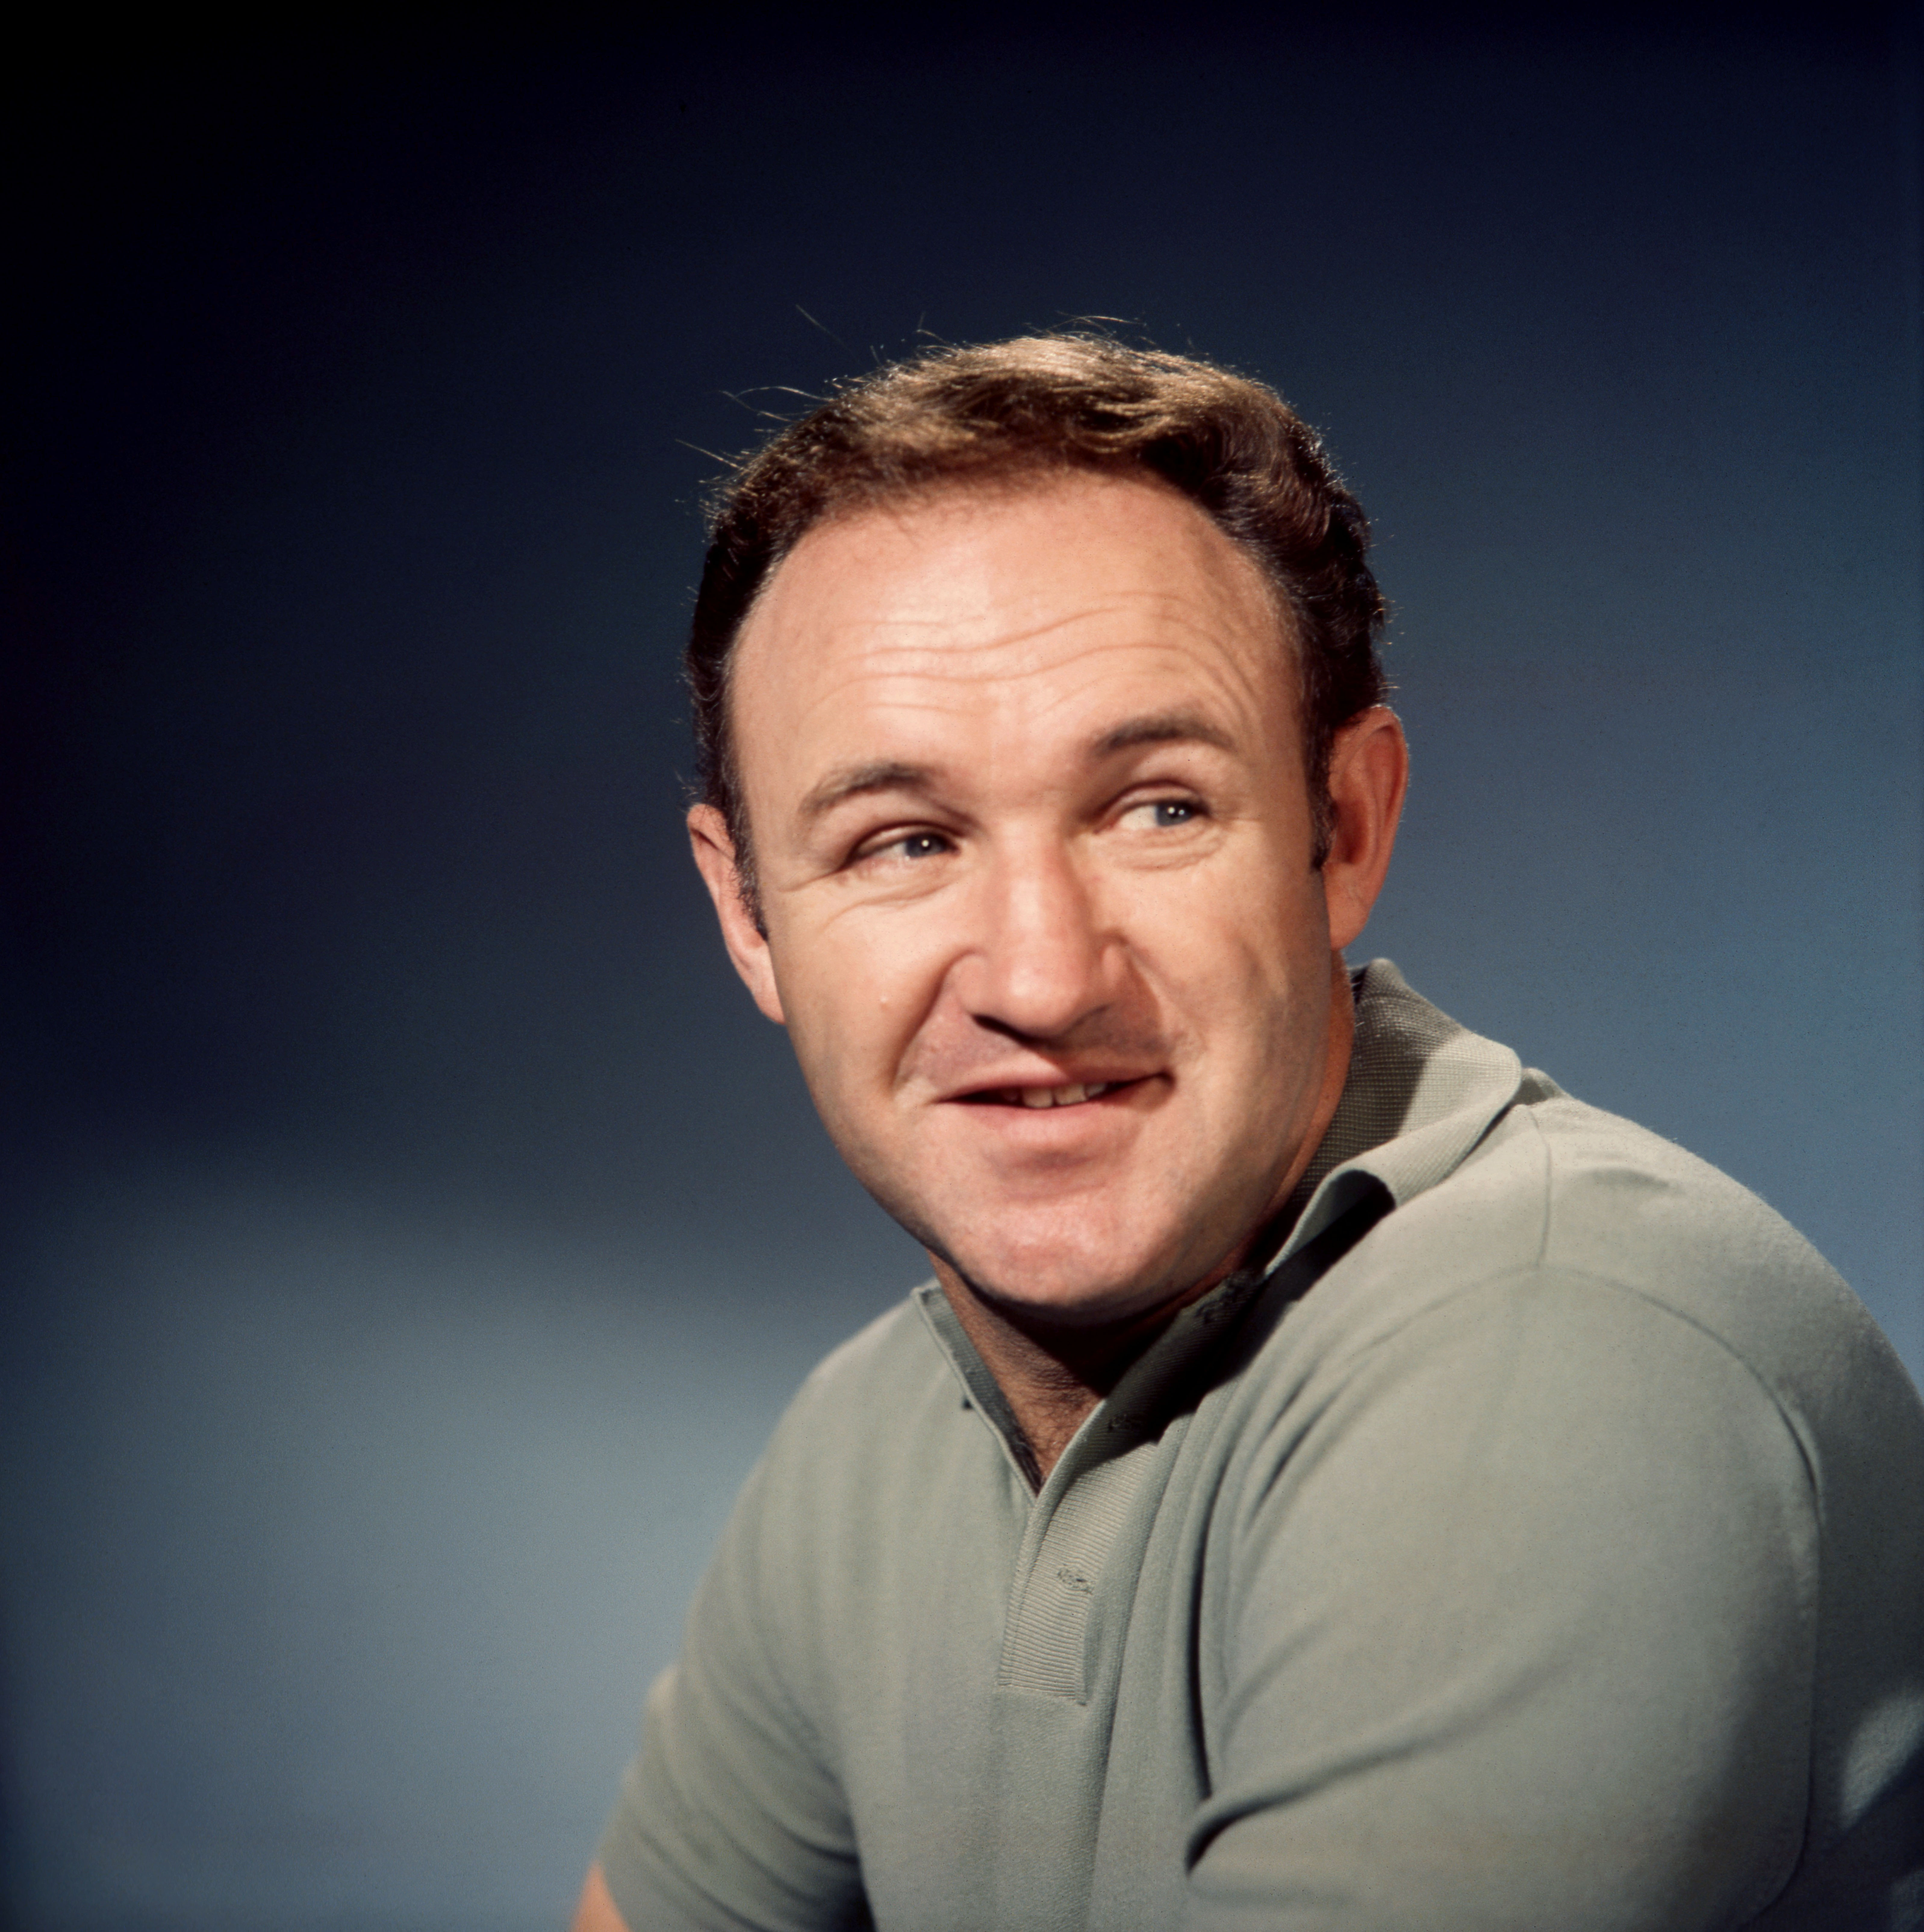 Publicity portrait of the famous actor, 1965  | Source: Getty Images